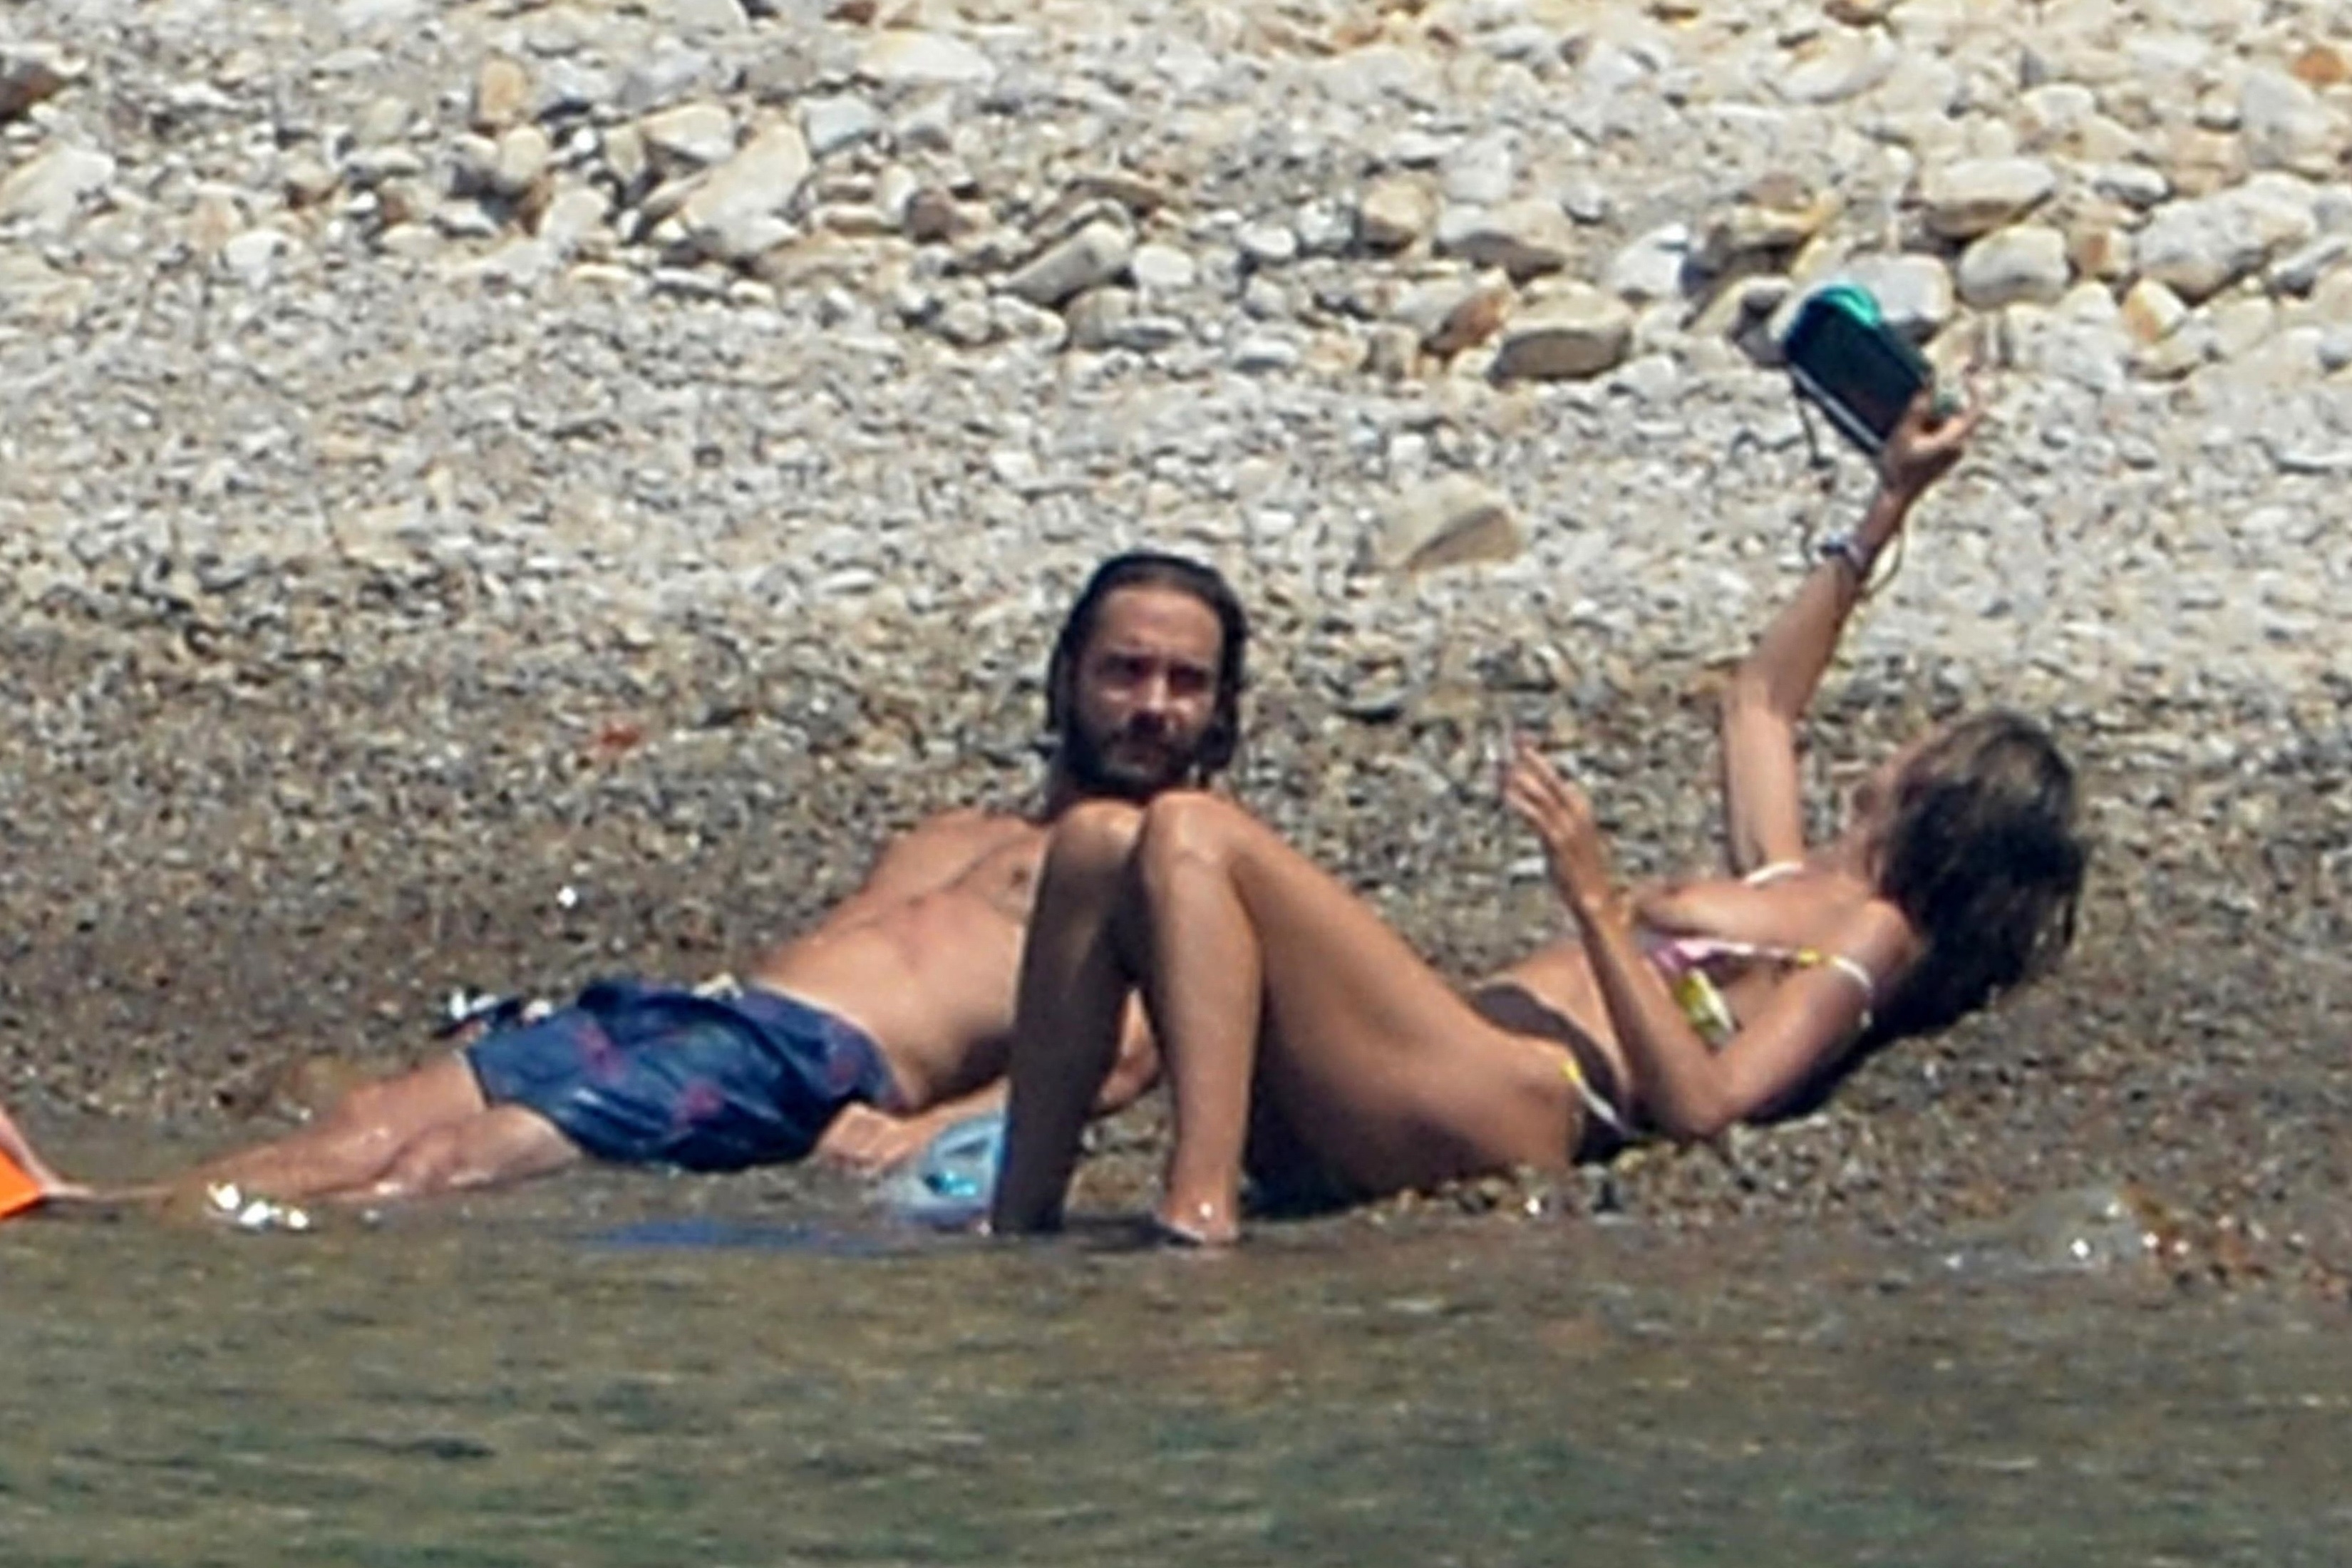 Heidi Klum Topless on a Beach in a Bikini DrunkenStepFather